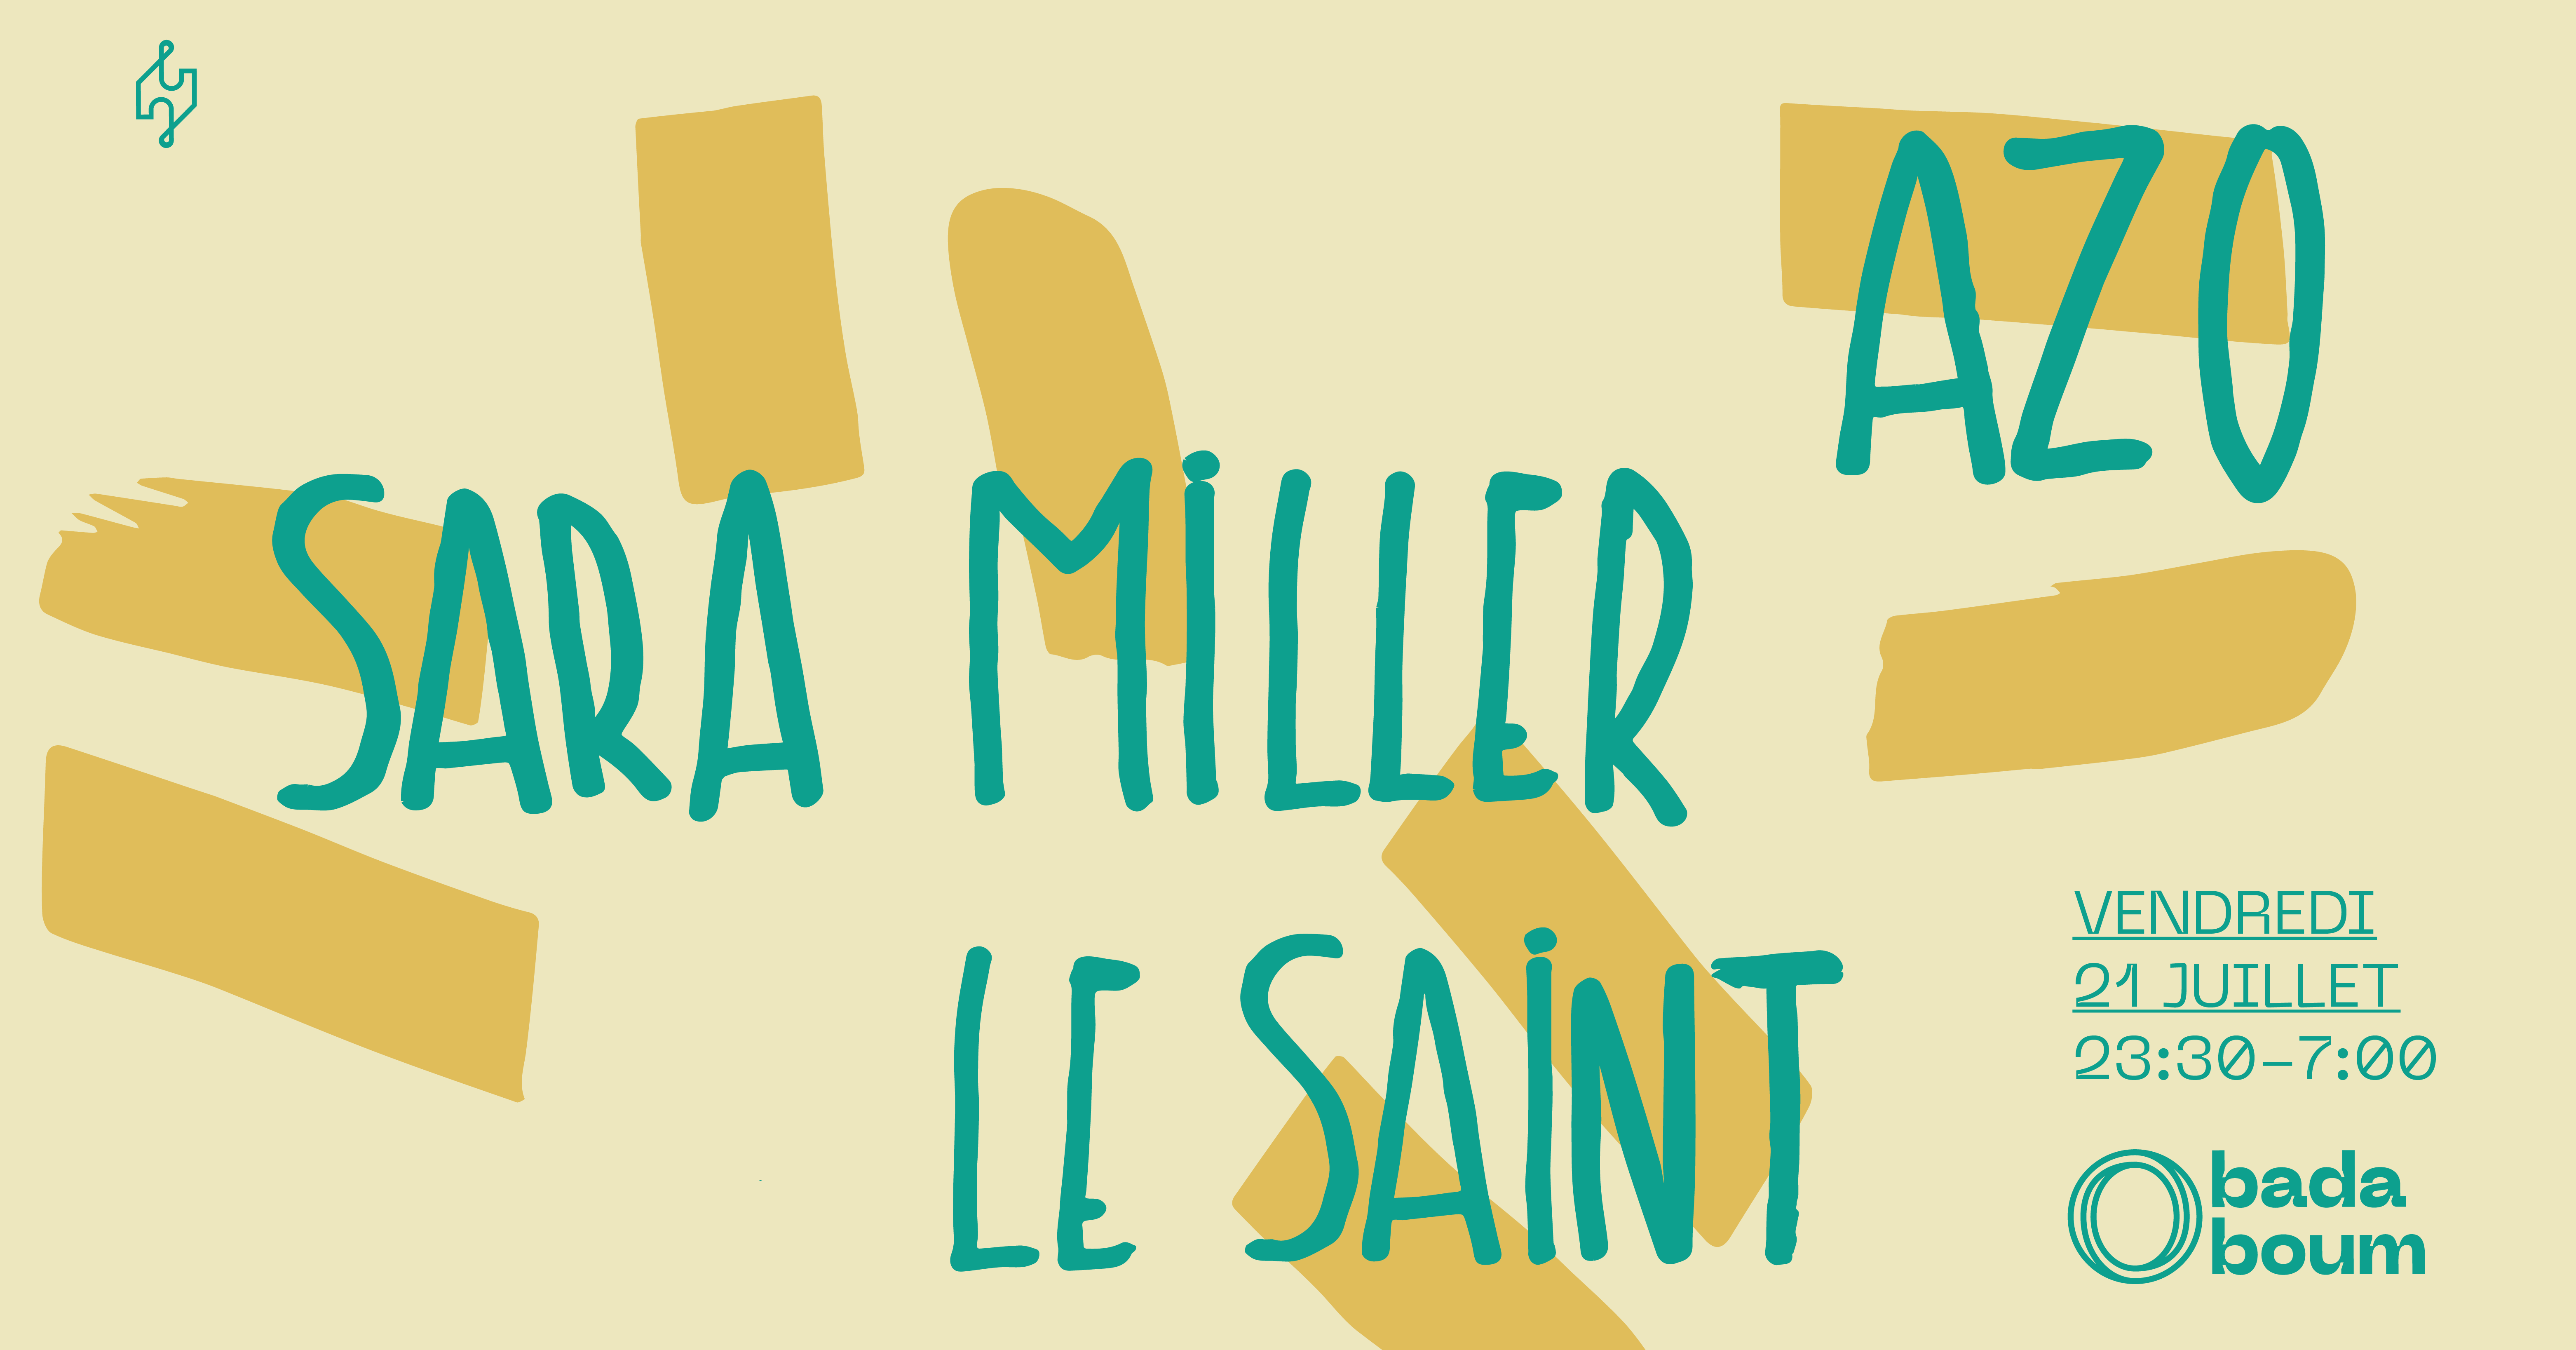 Club — Azo (+) Sara Miller (+) Le Saint - フライヤー表